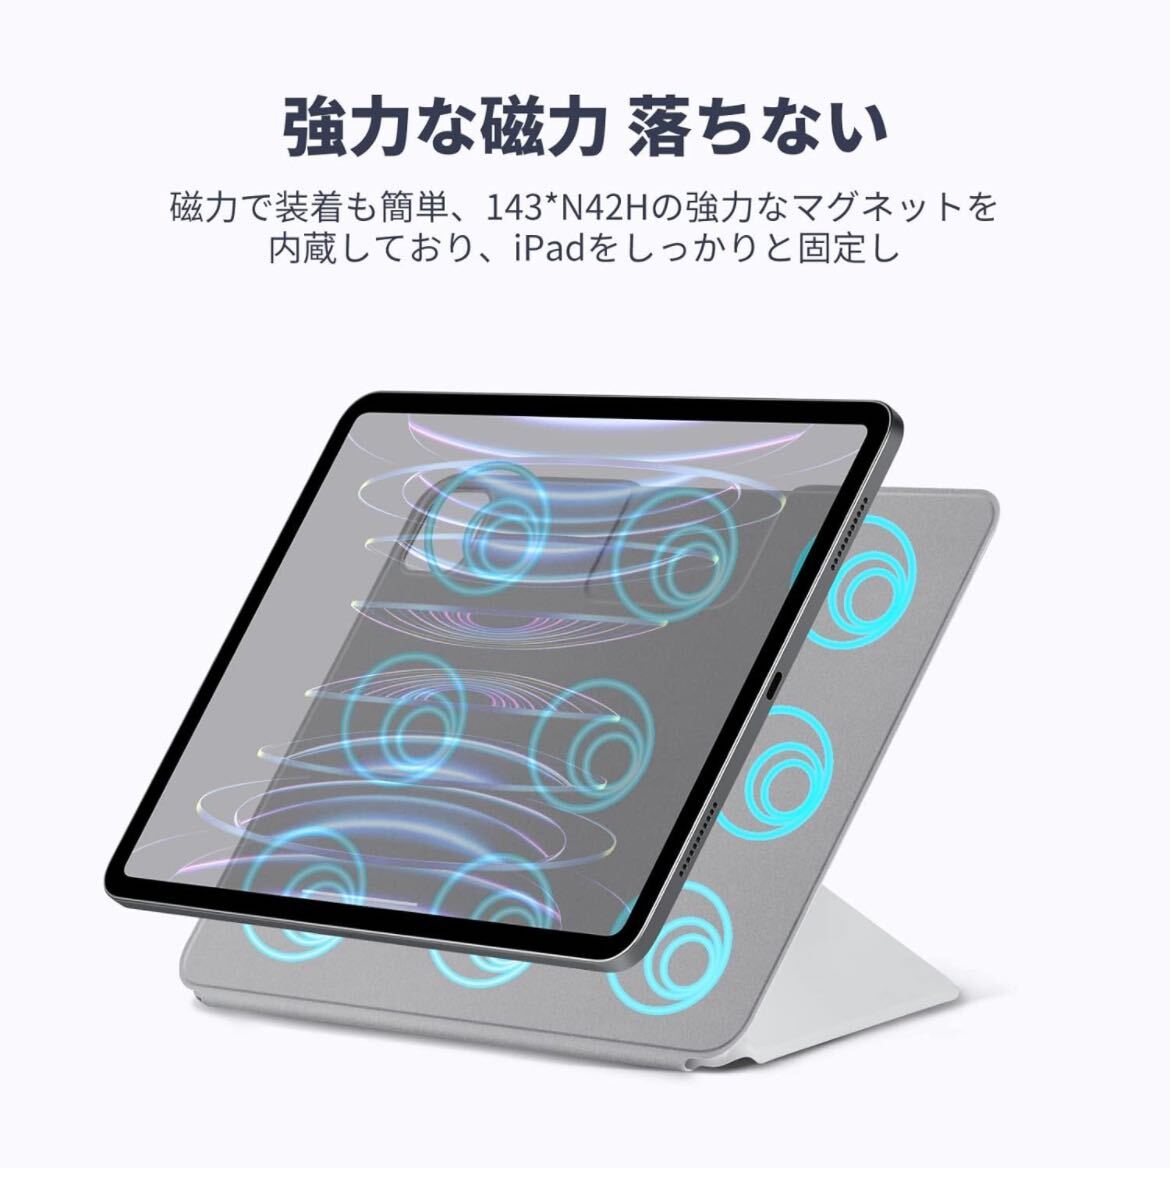 605p0619☆ PITAKA iPad Pro 12.9 ケース タブレットスタンド 磁気吸着 超スリム 軽量 極薄 衝撃保護 折りたたみ 角度調整可能 _画像3